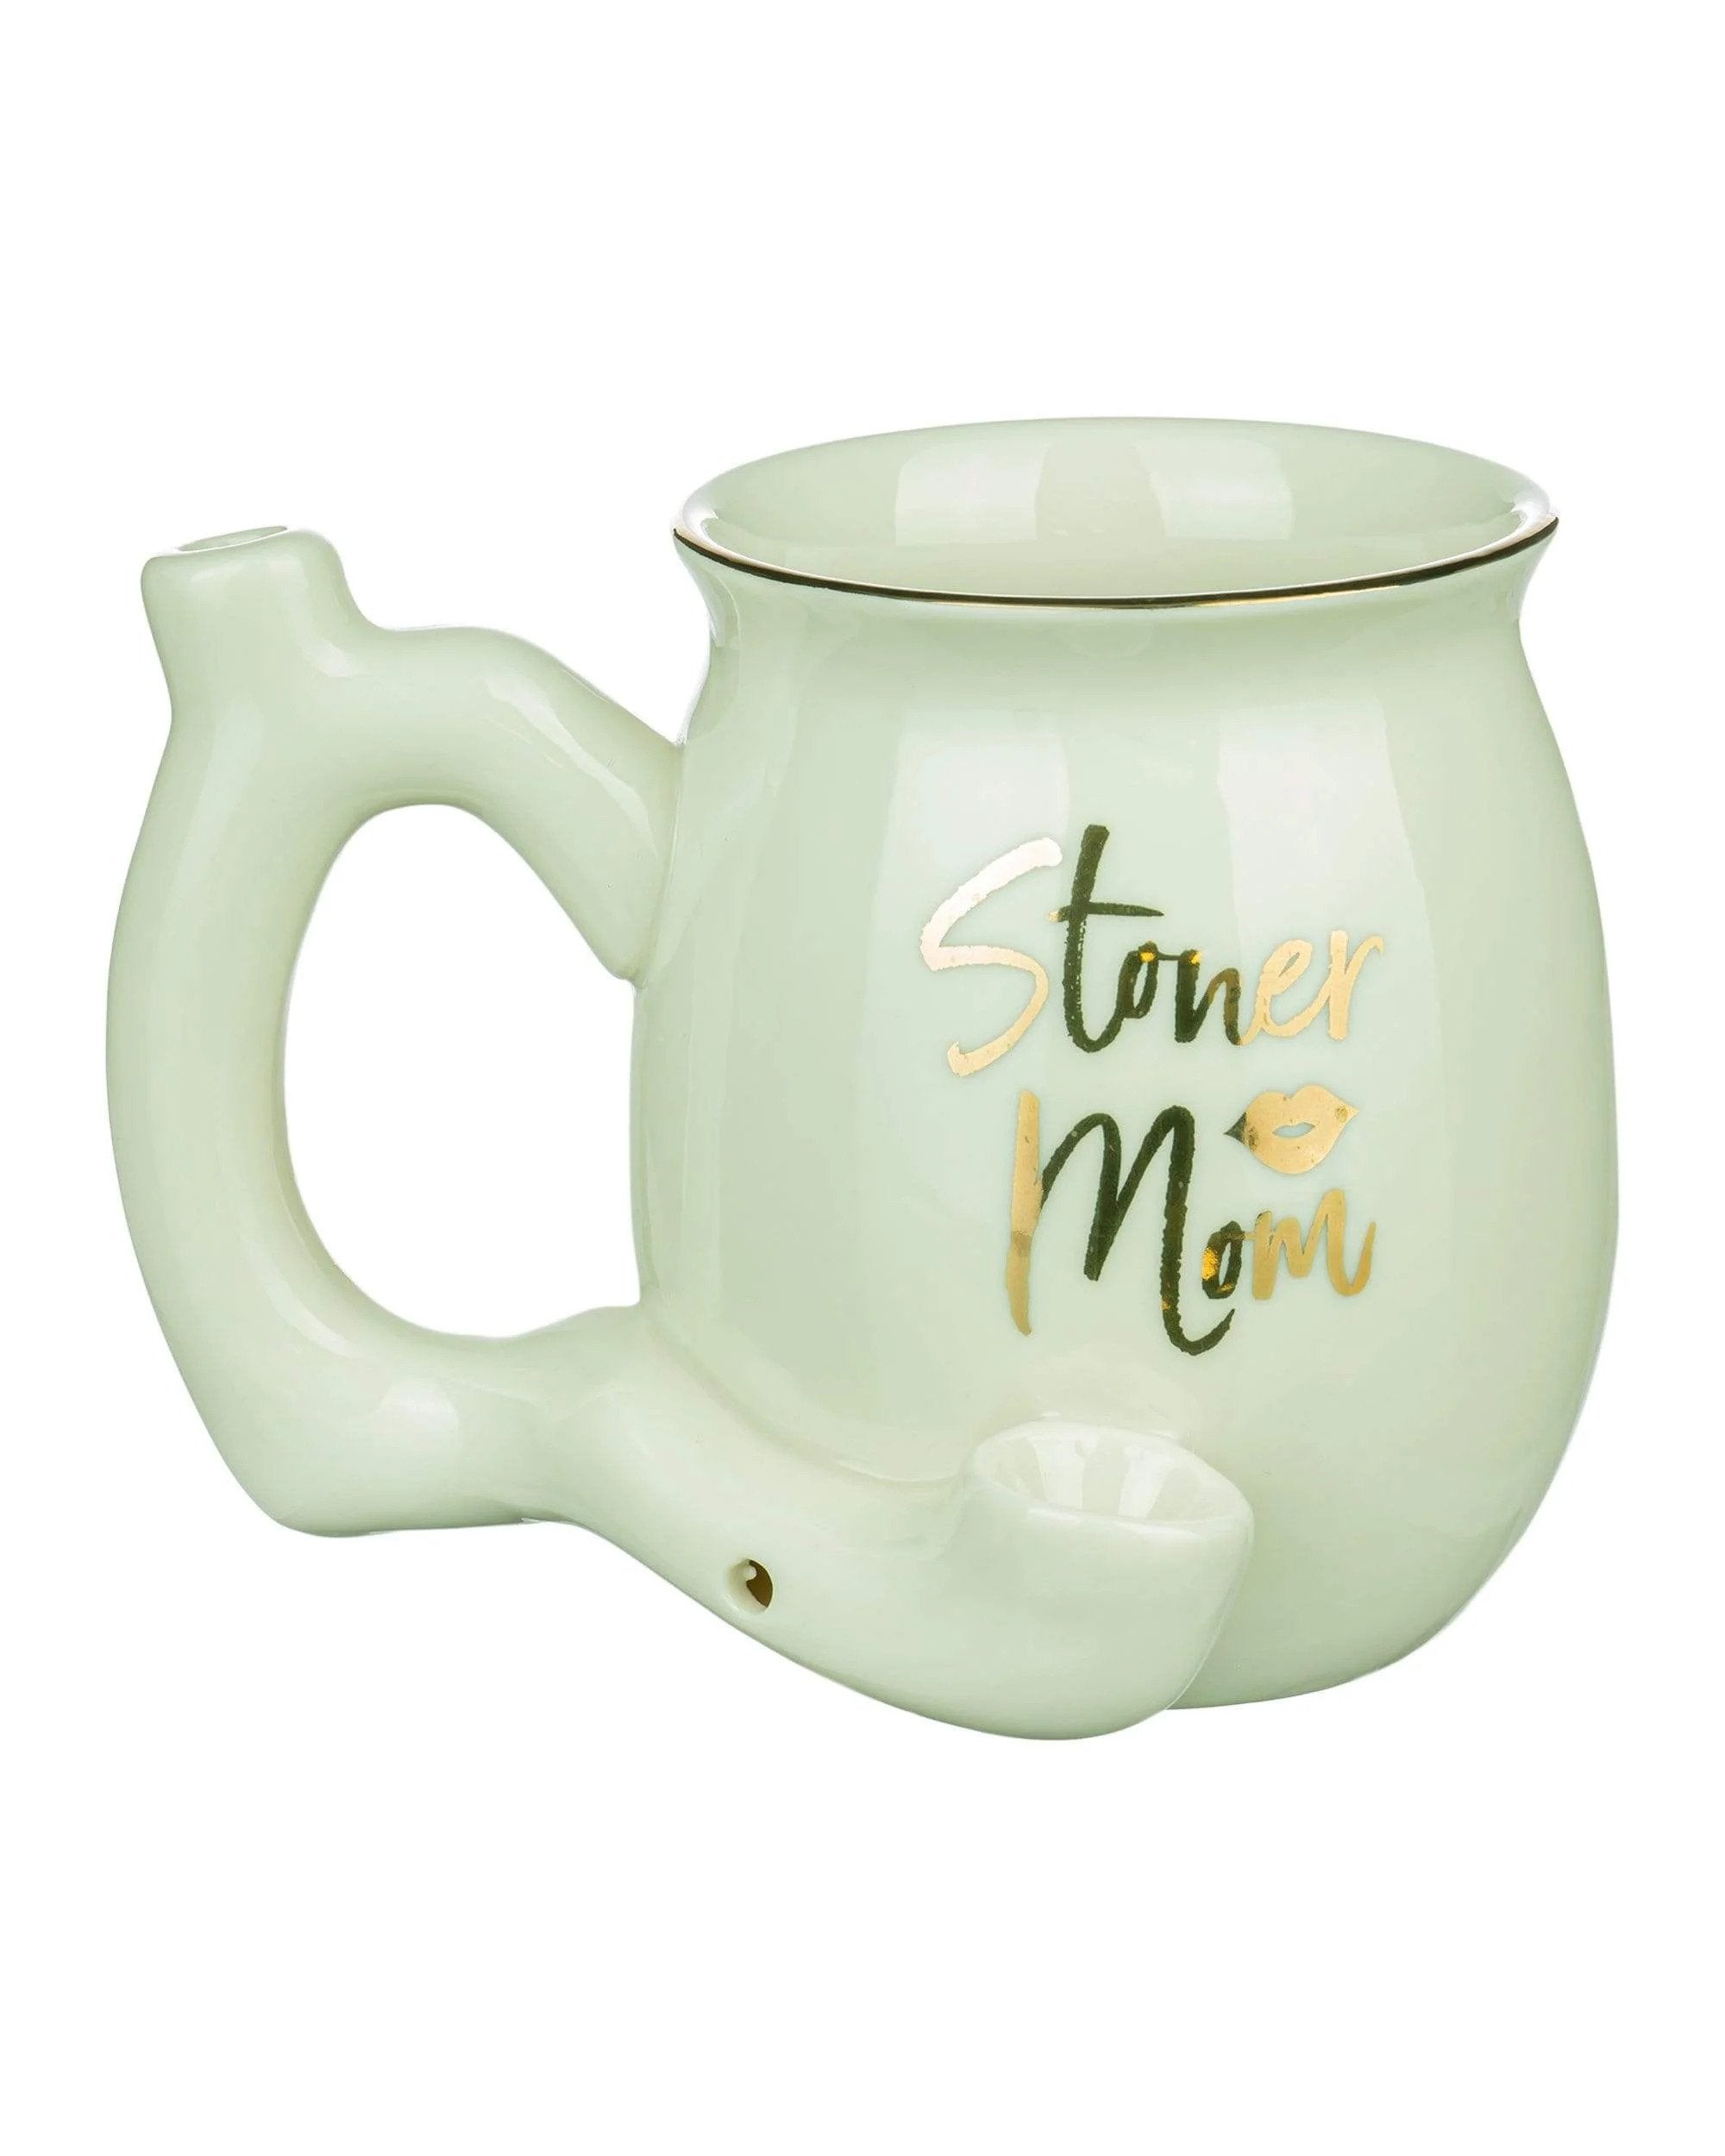 Stoner Mom Pipe Mug, White  11 oz Mug with Integrated Pipe